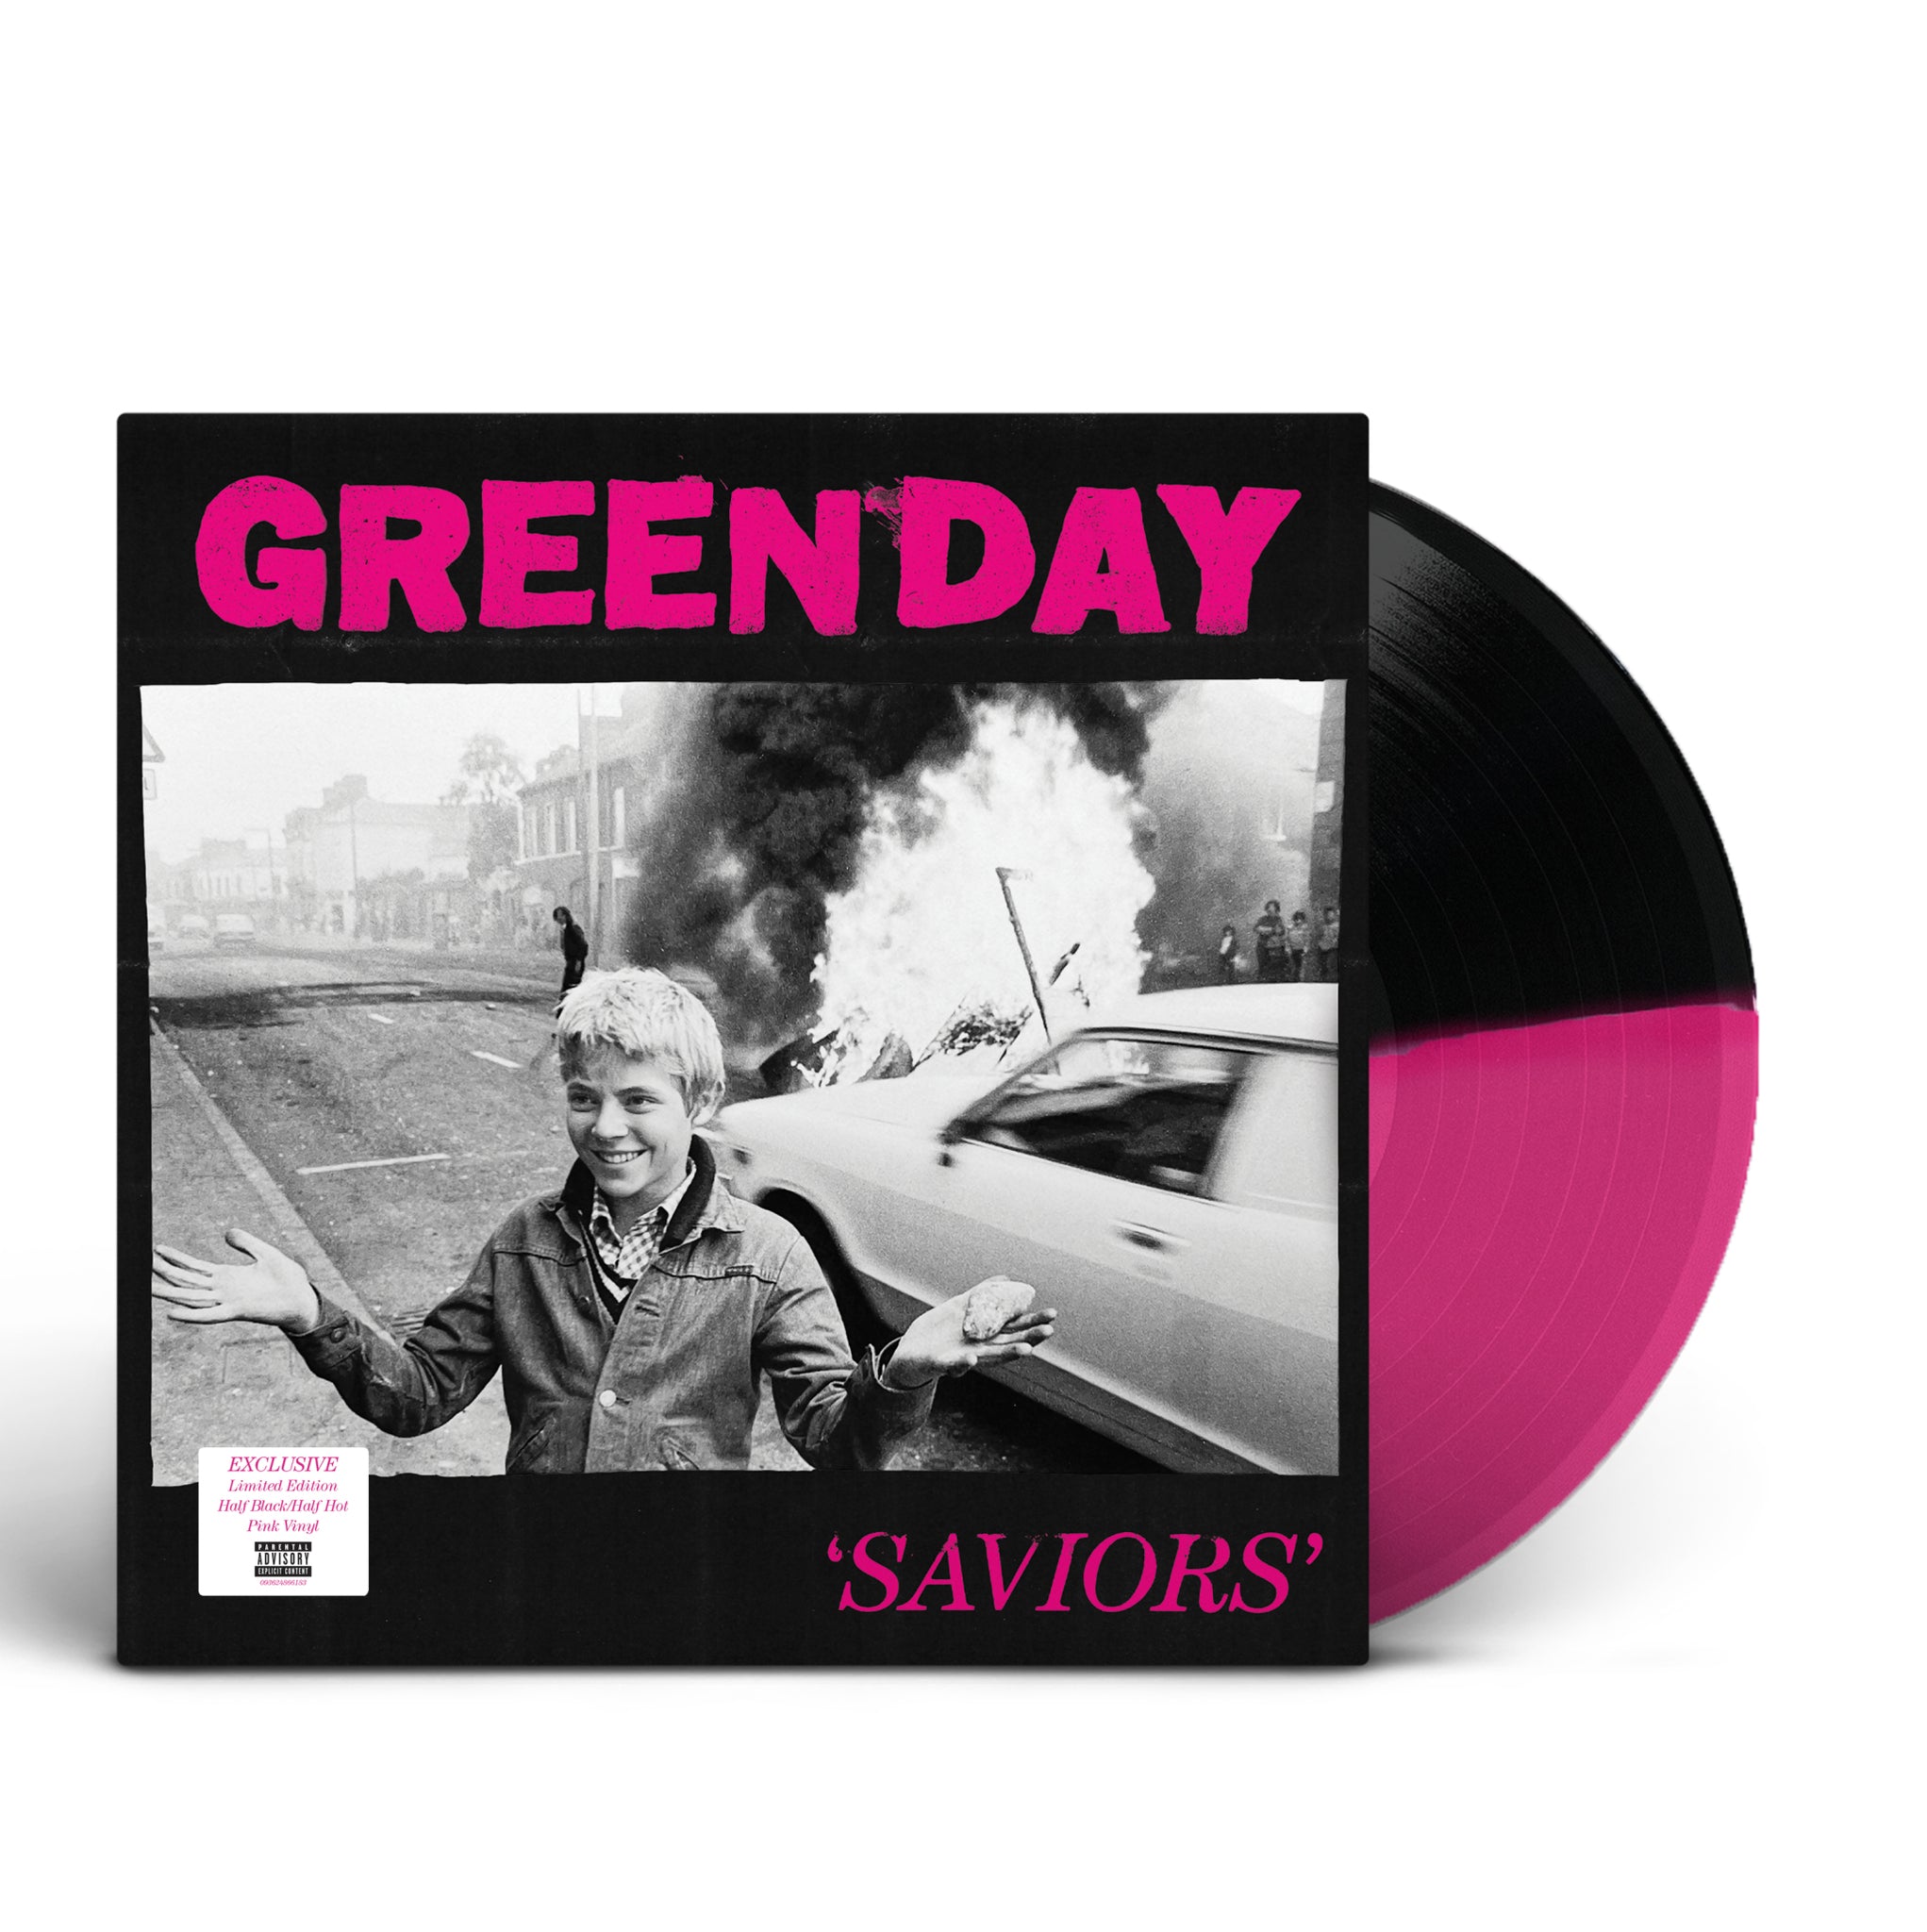 Green Day- Saviors (Indie Exclusive Magenta & Black Split w/ Poster)